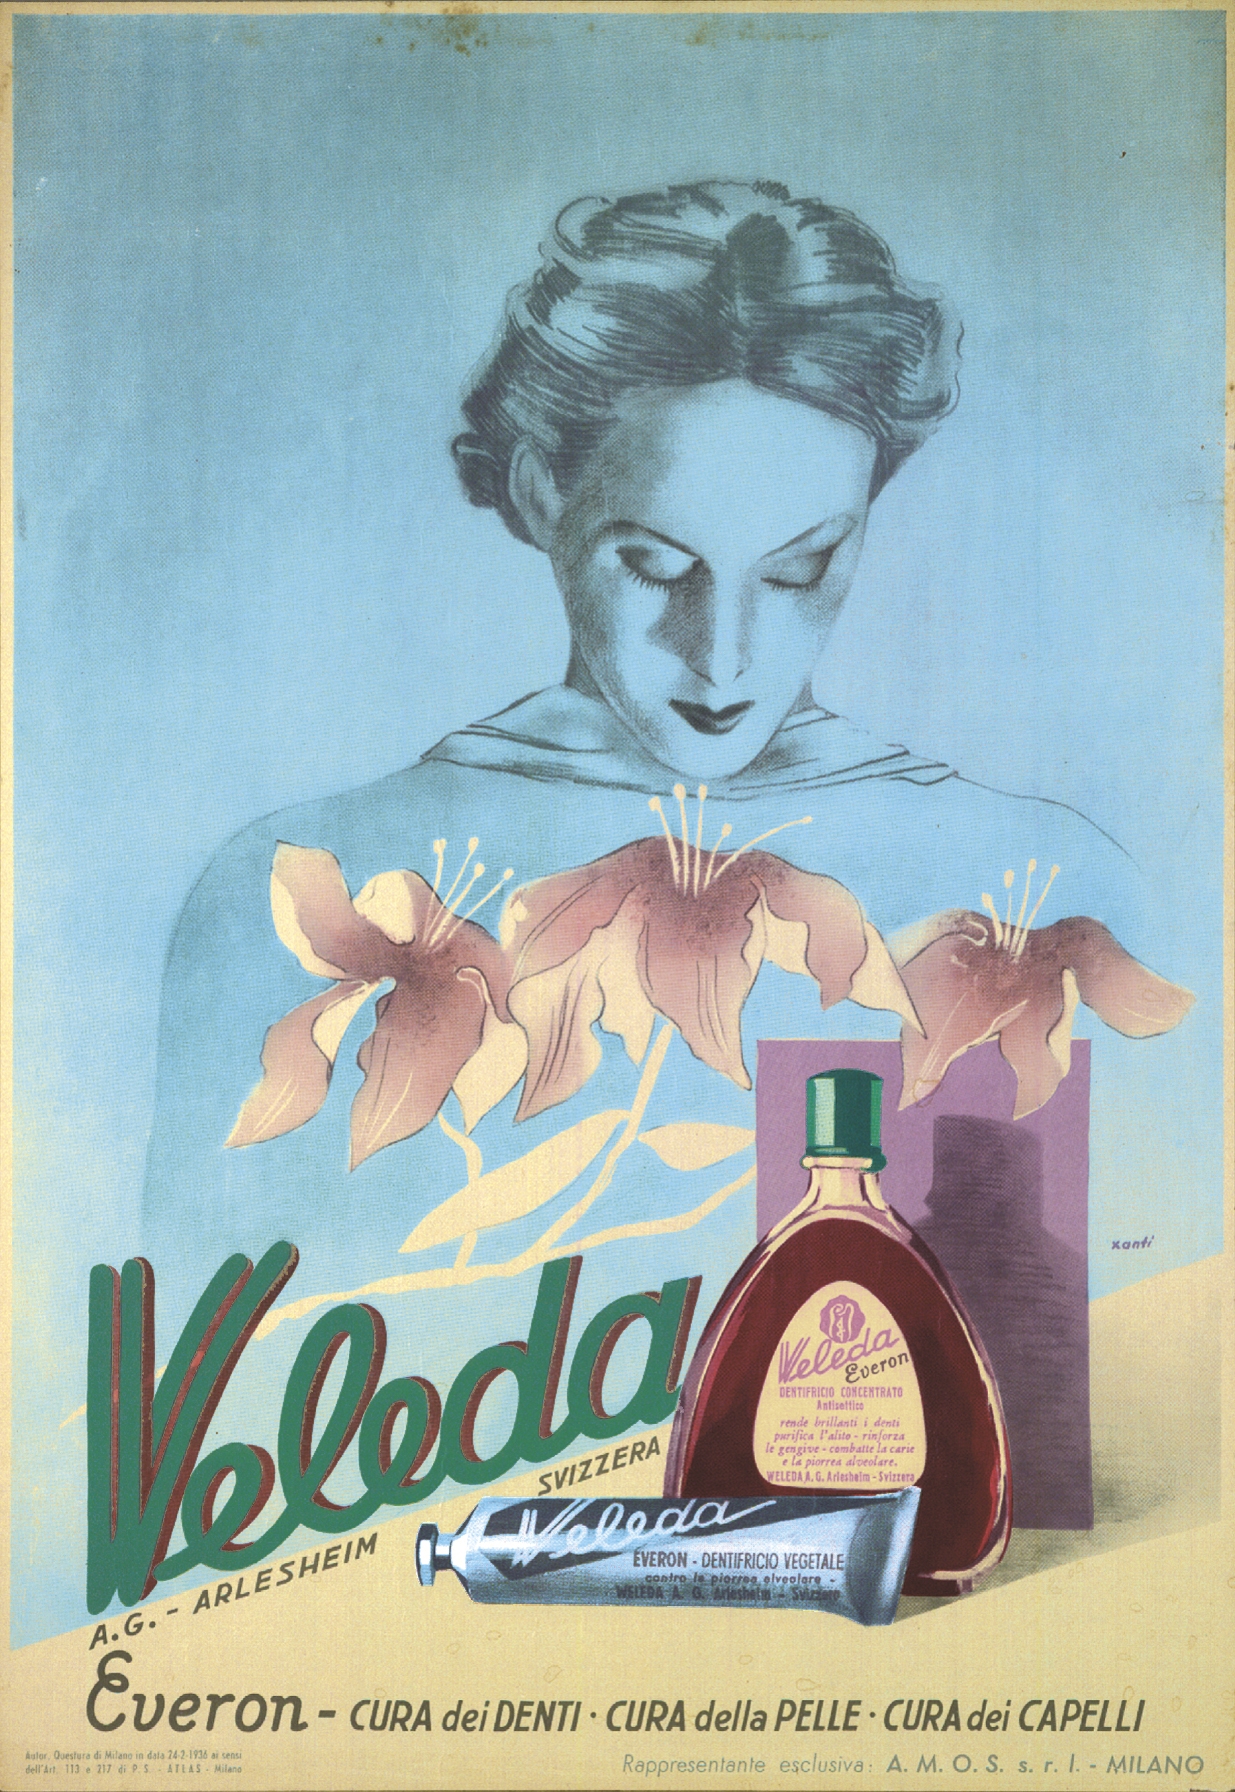 Weleda advertisement for the Everon cosmetics range, Italy, 1920s